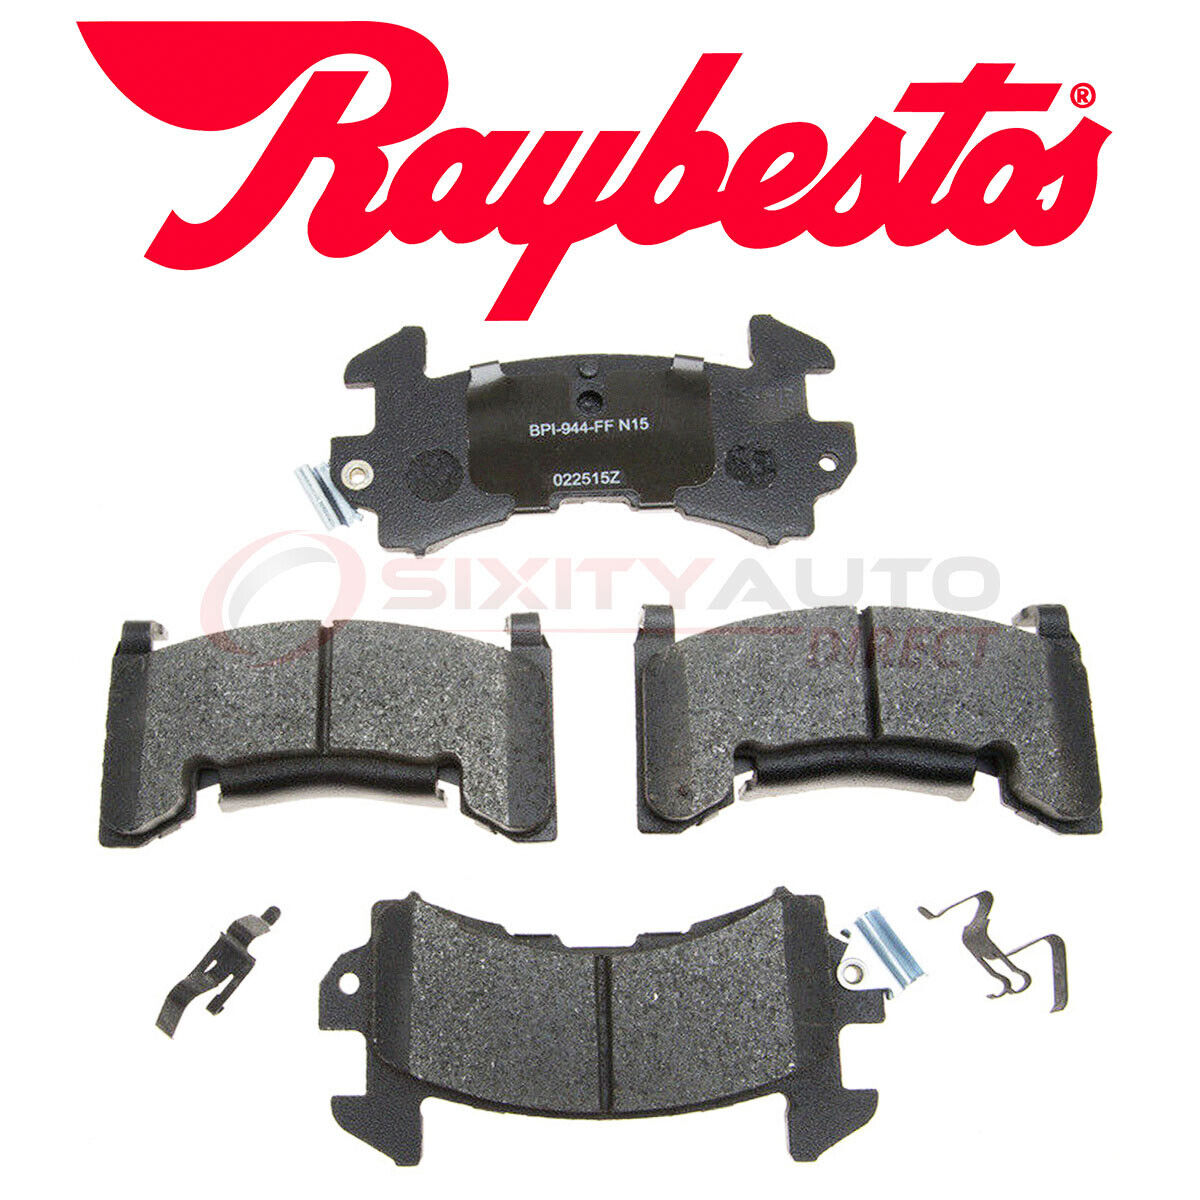 Raybestos Truck Metallic Disc Brake Pads for 1978-1983 Oldsmobile Cutlass xn